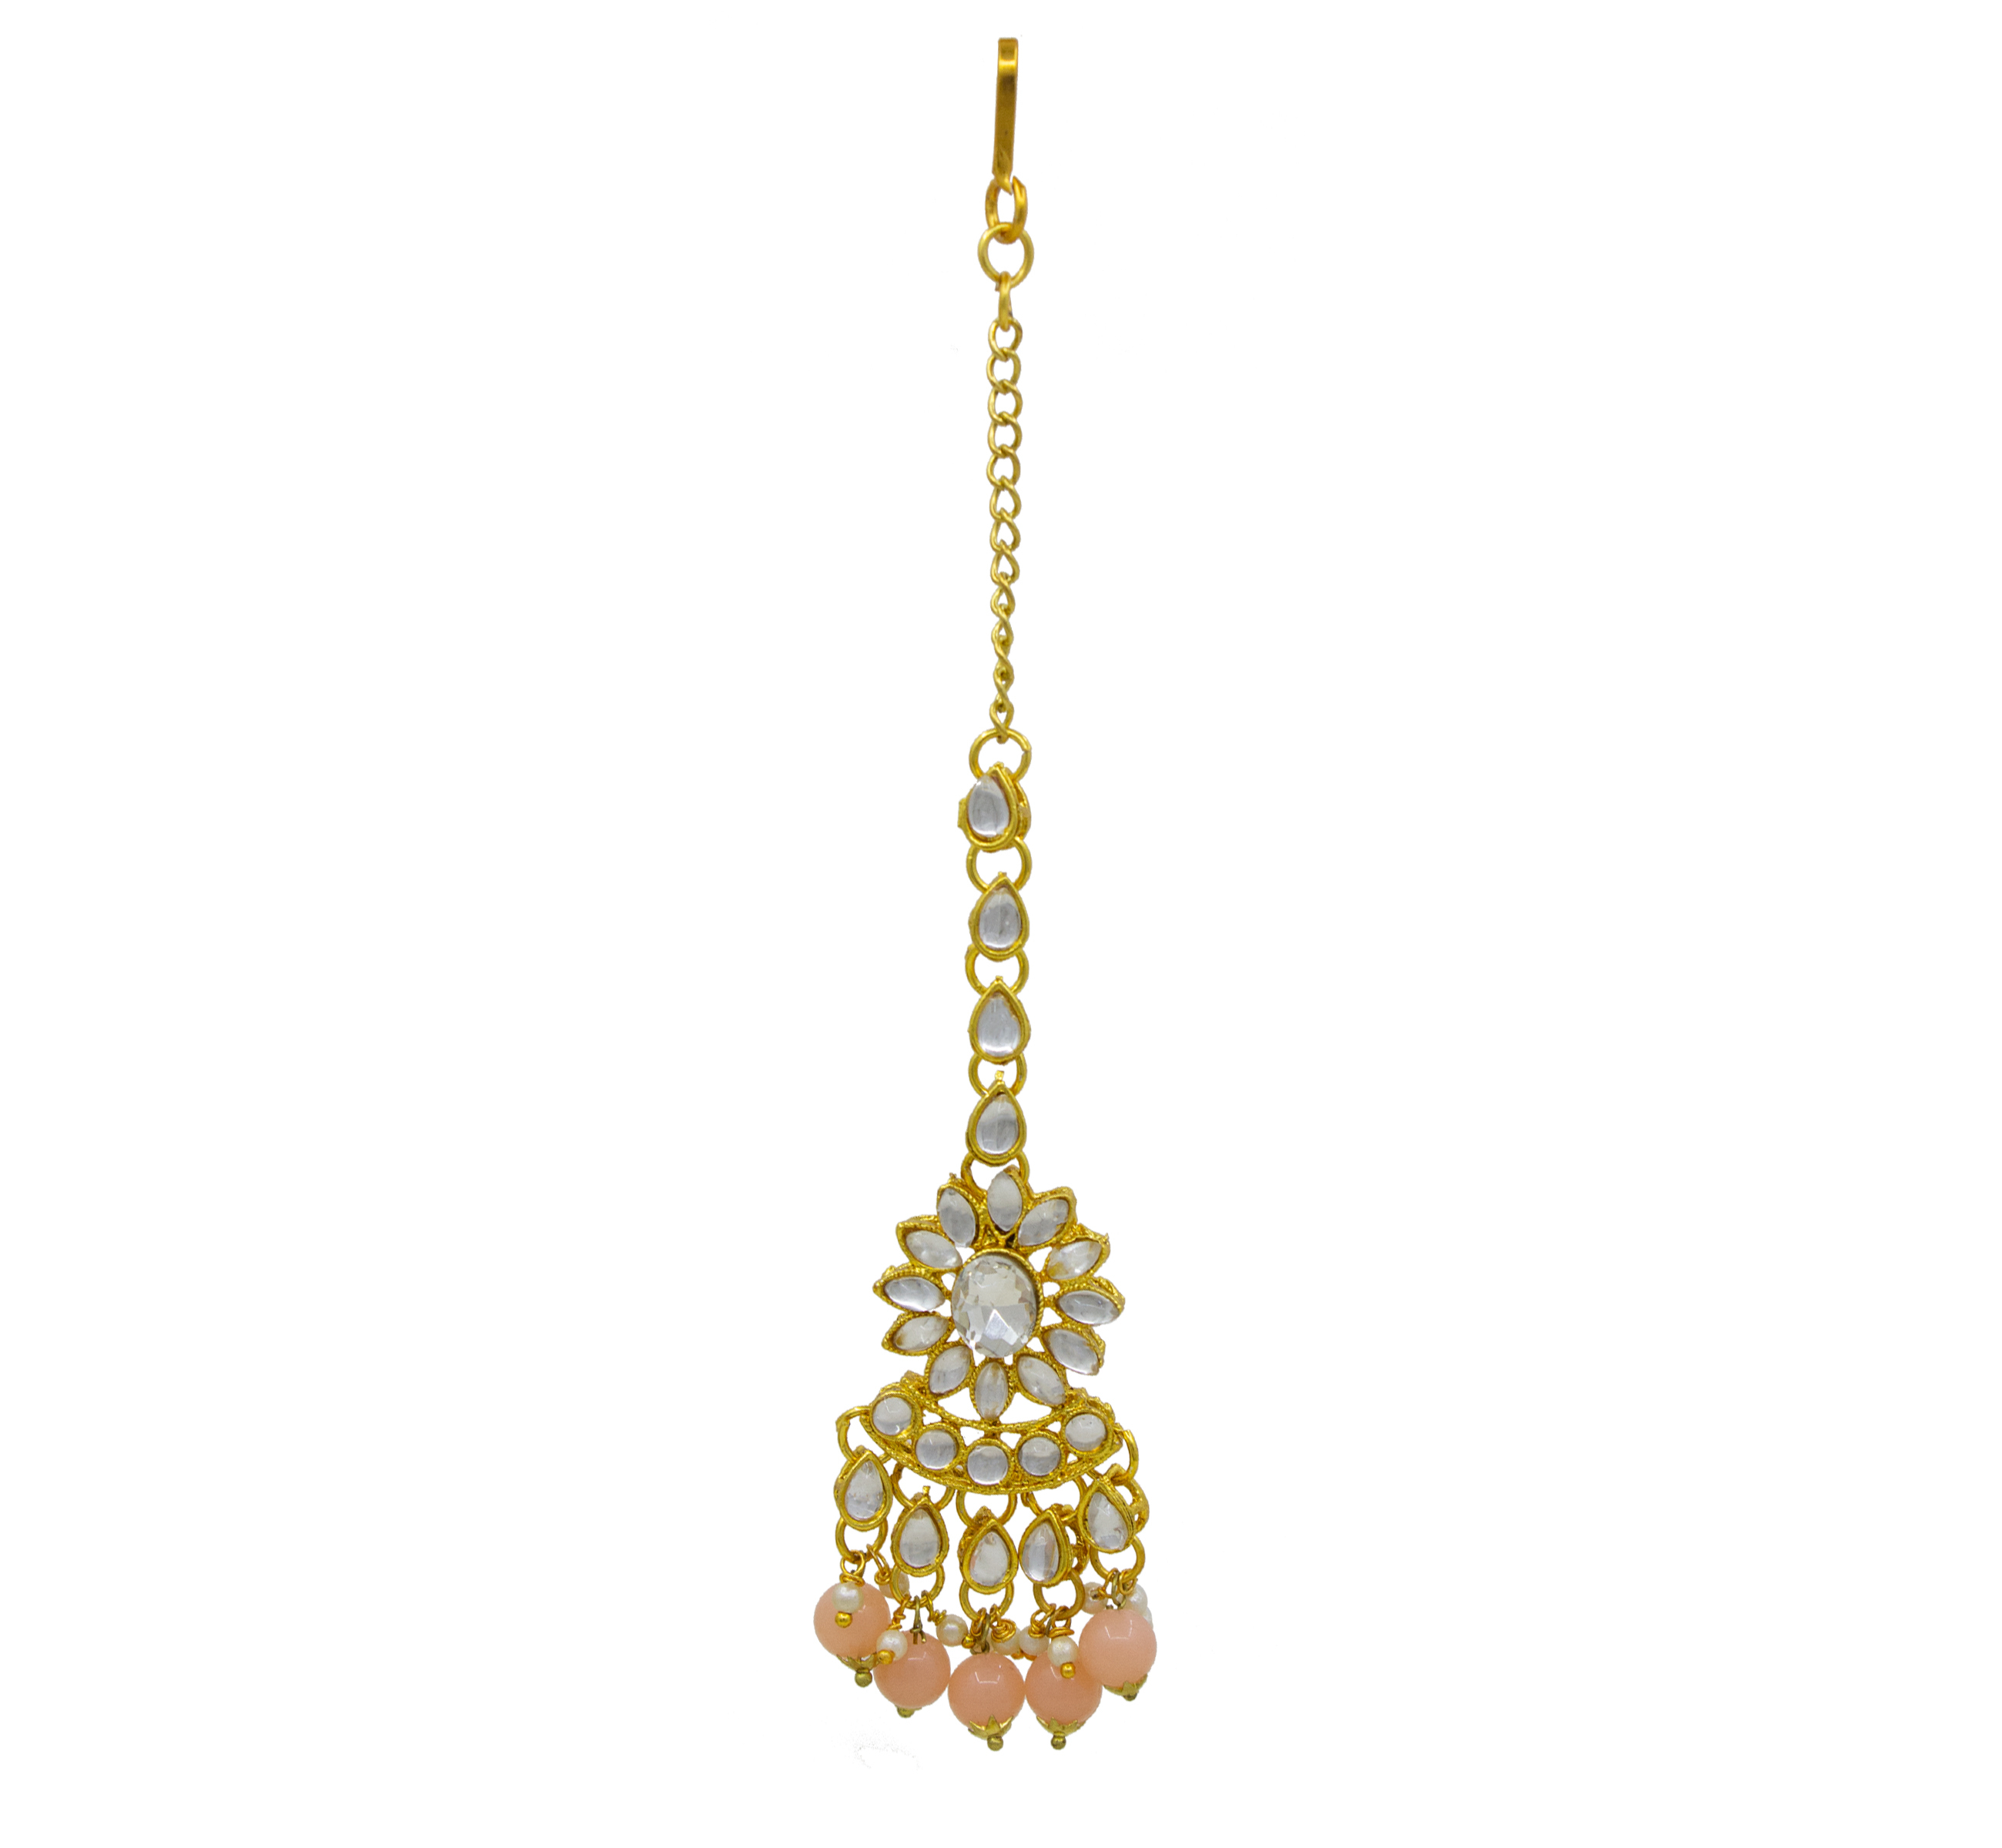 Traditional Indian Bridal Peach Kundan Choker Gold Plated Necklace Set